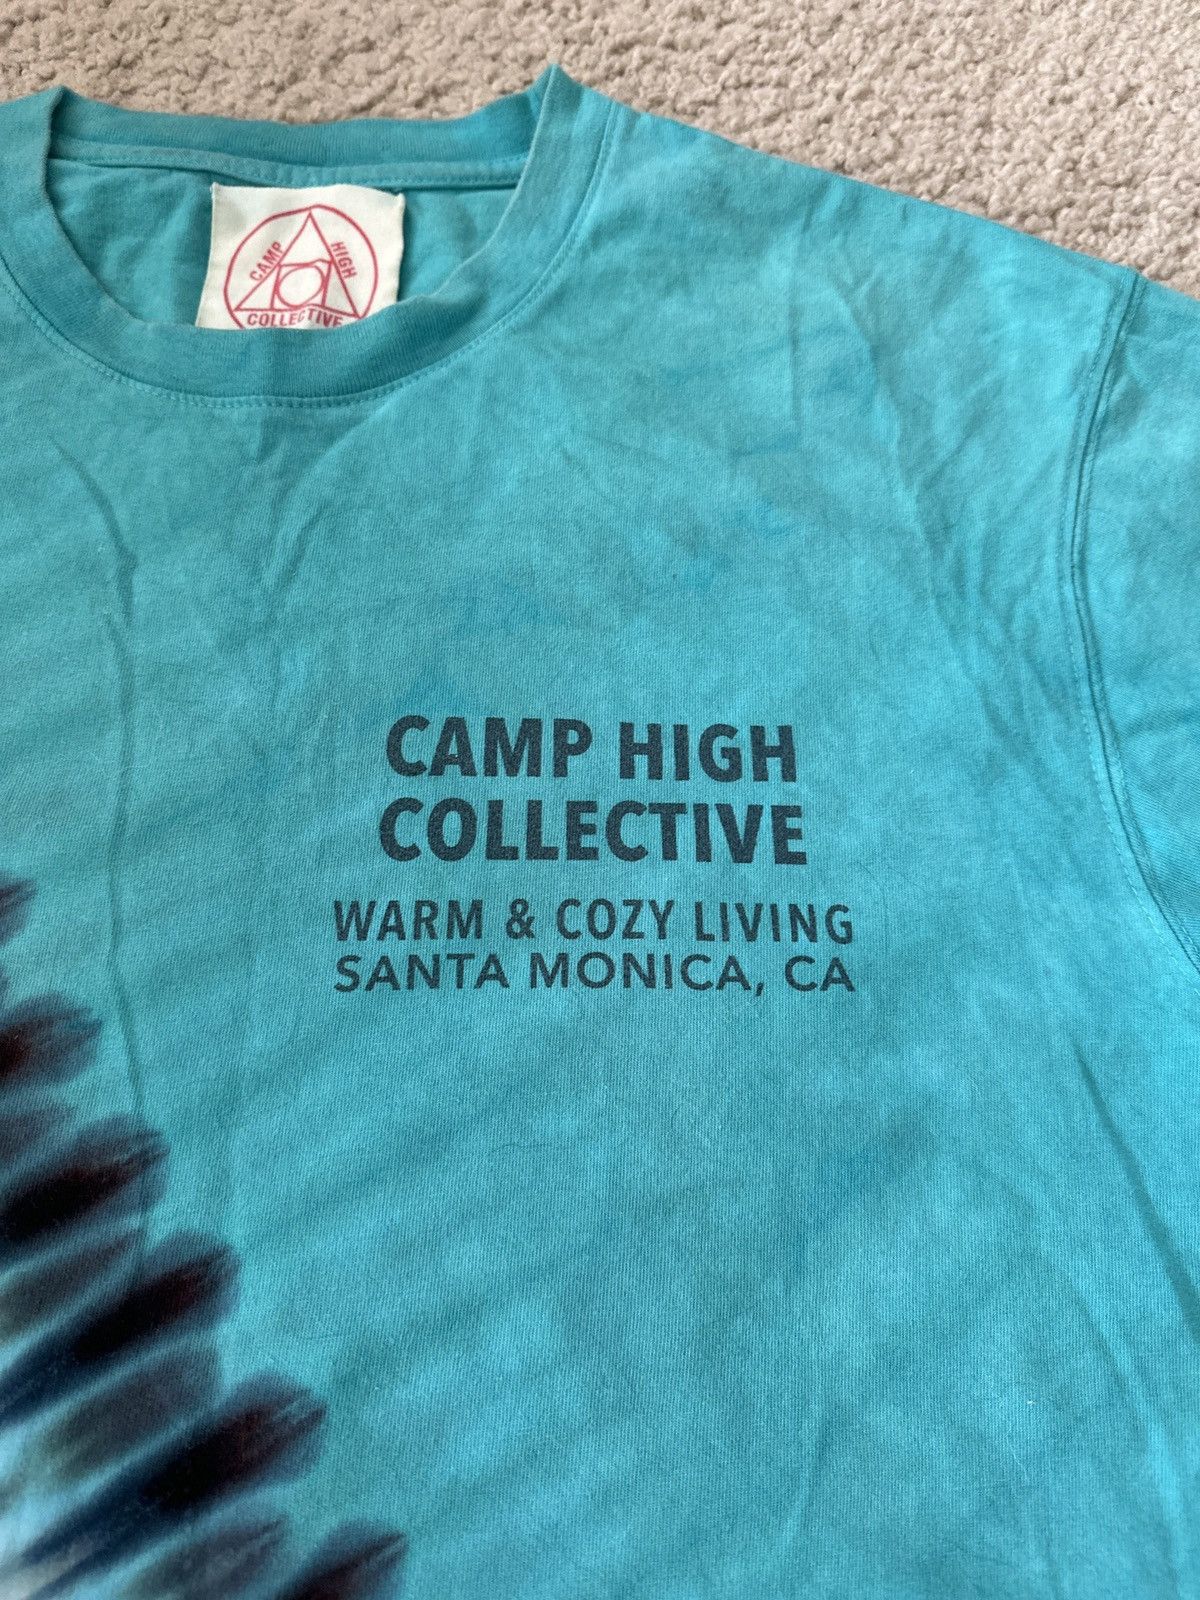 Camp High Camp High Tie Dye Teal Shirt Size US L / EU 52-54 / 3 - 2 Preview